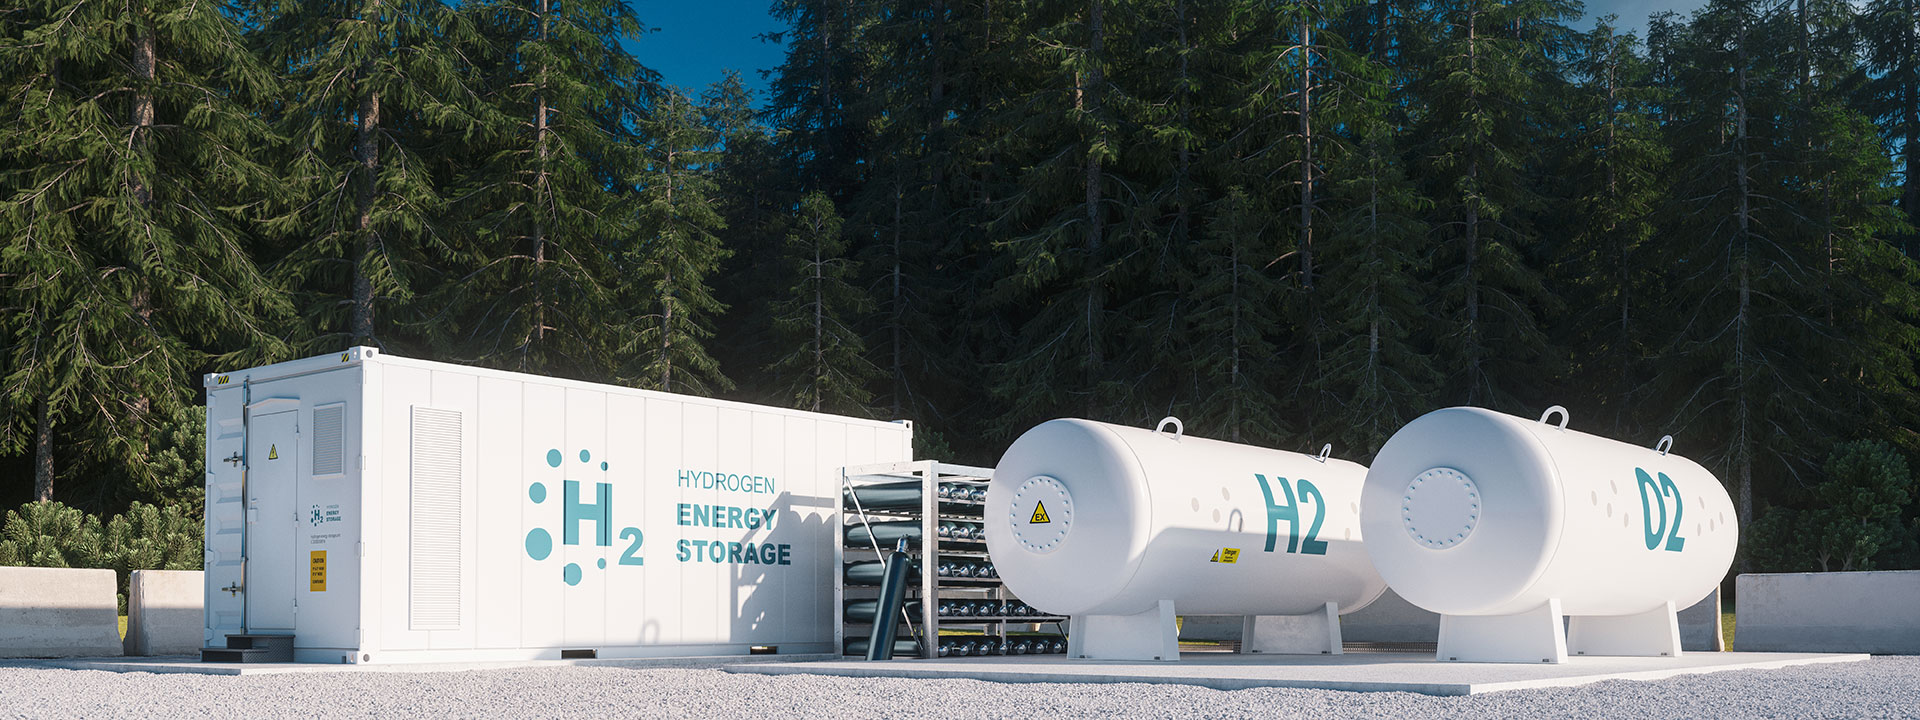 A hydrogen storage tank